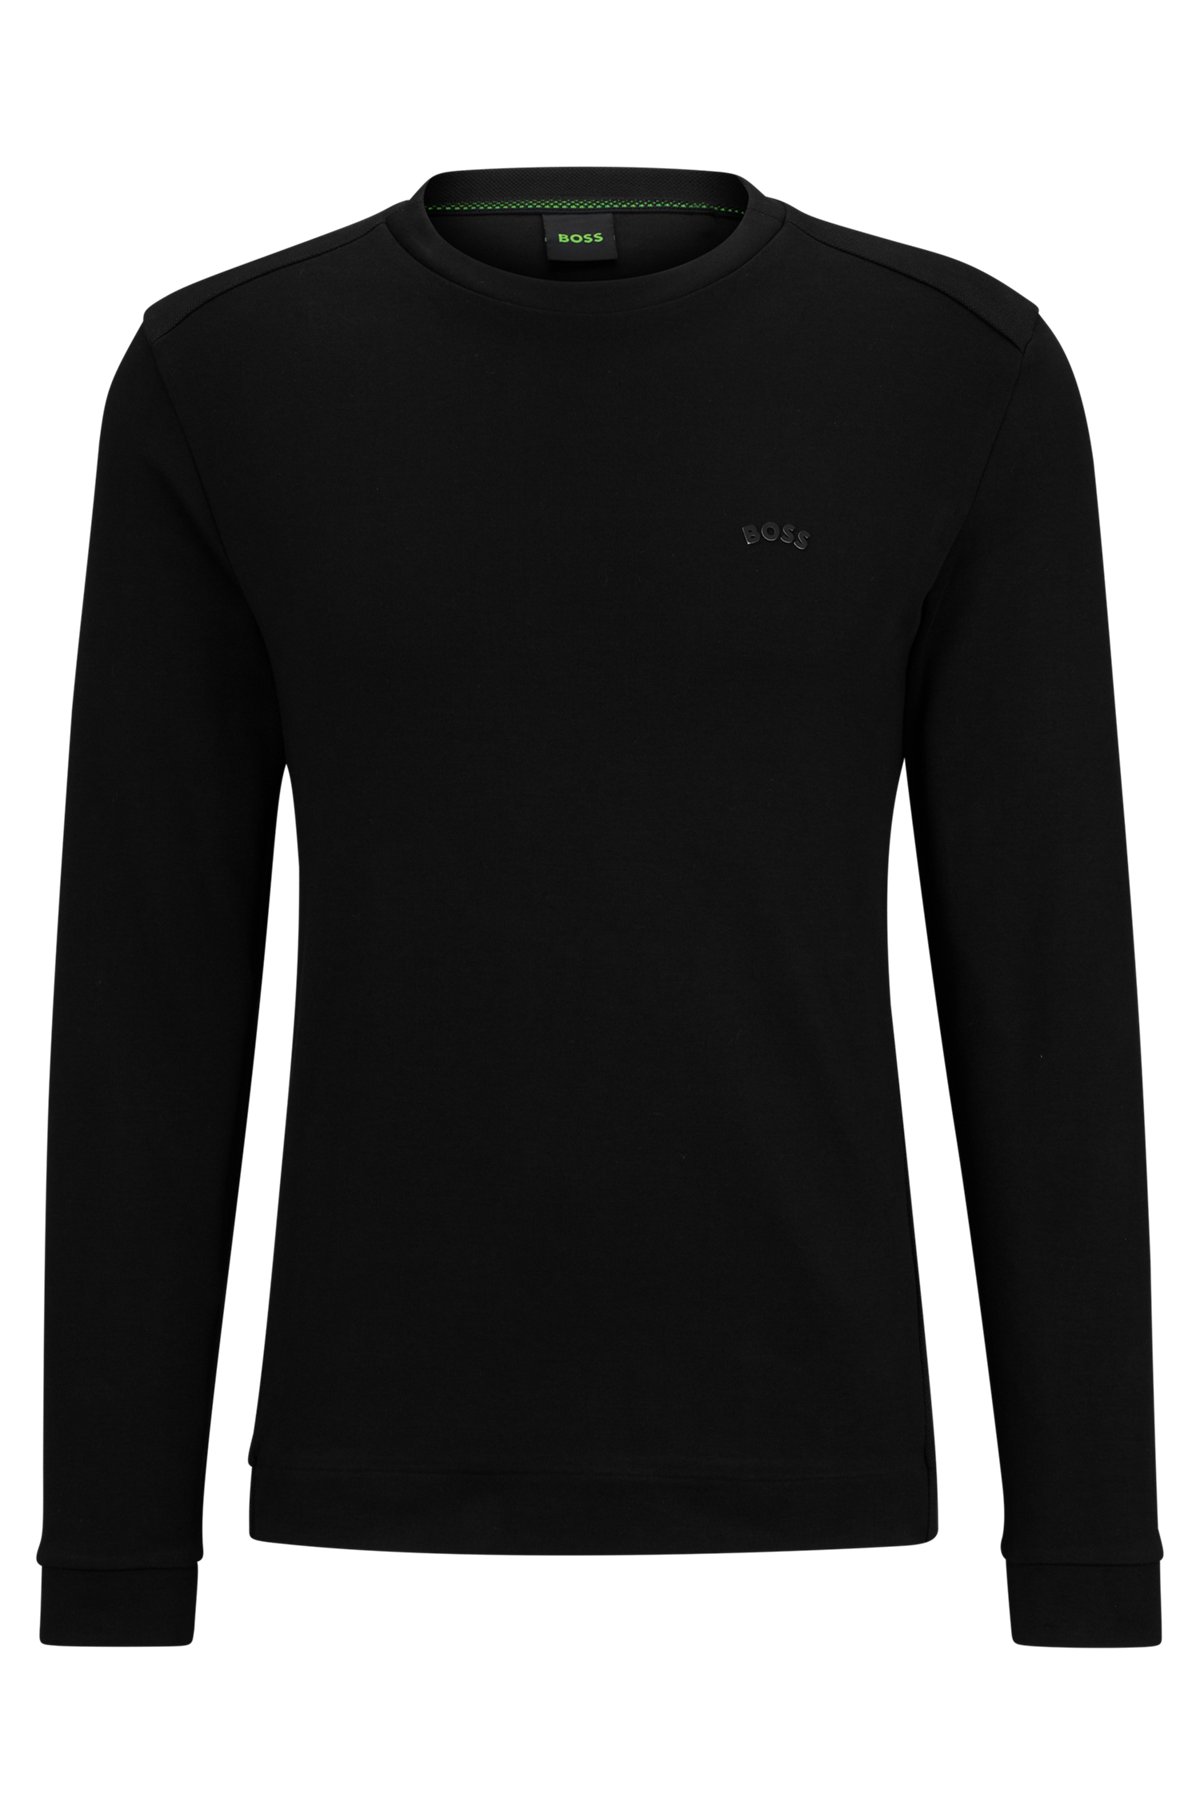 Crew-neck sweatshirt in interlock cotton with curved logo, Black